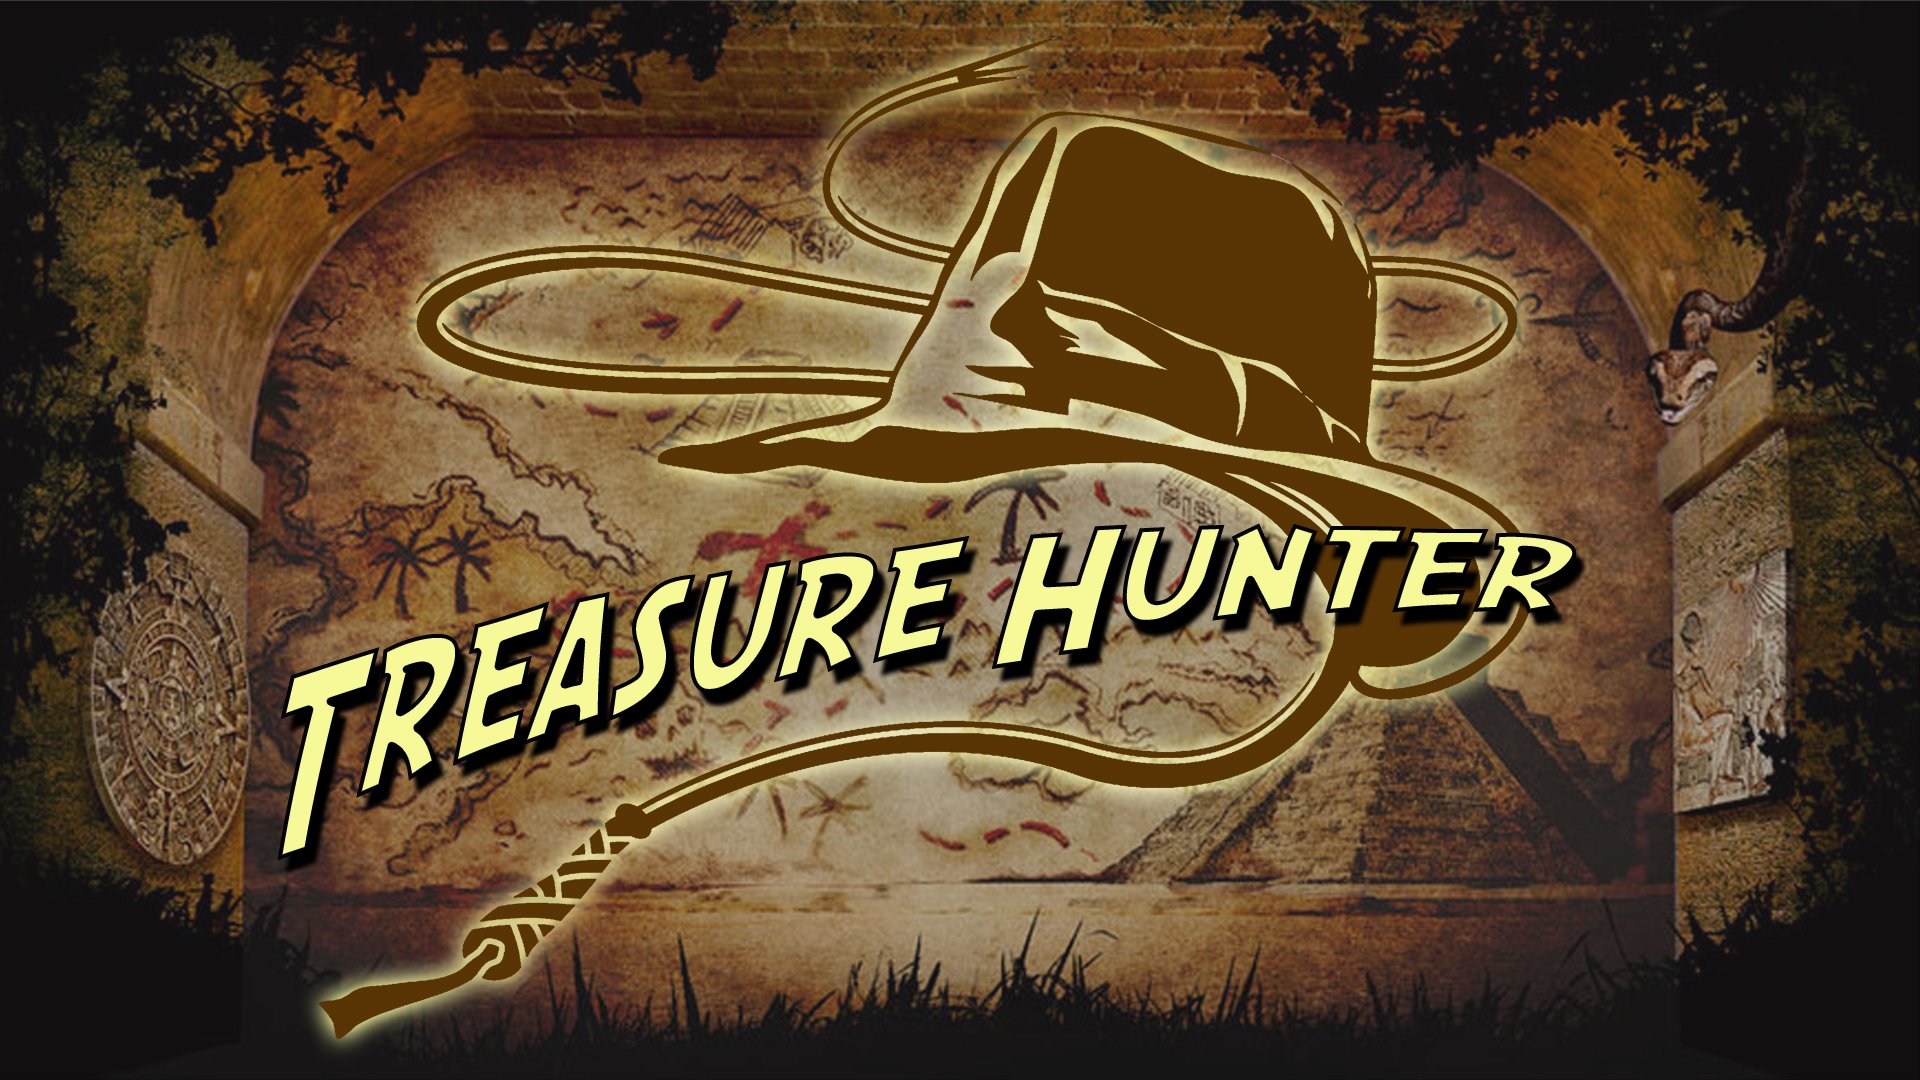 Treasure Hunter: Week 8